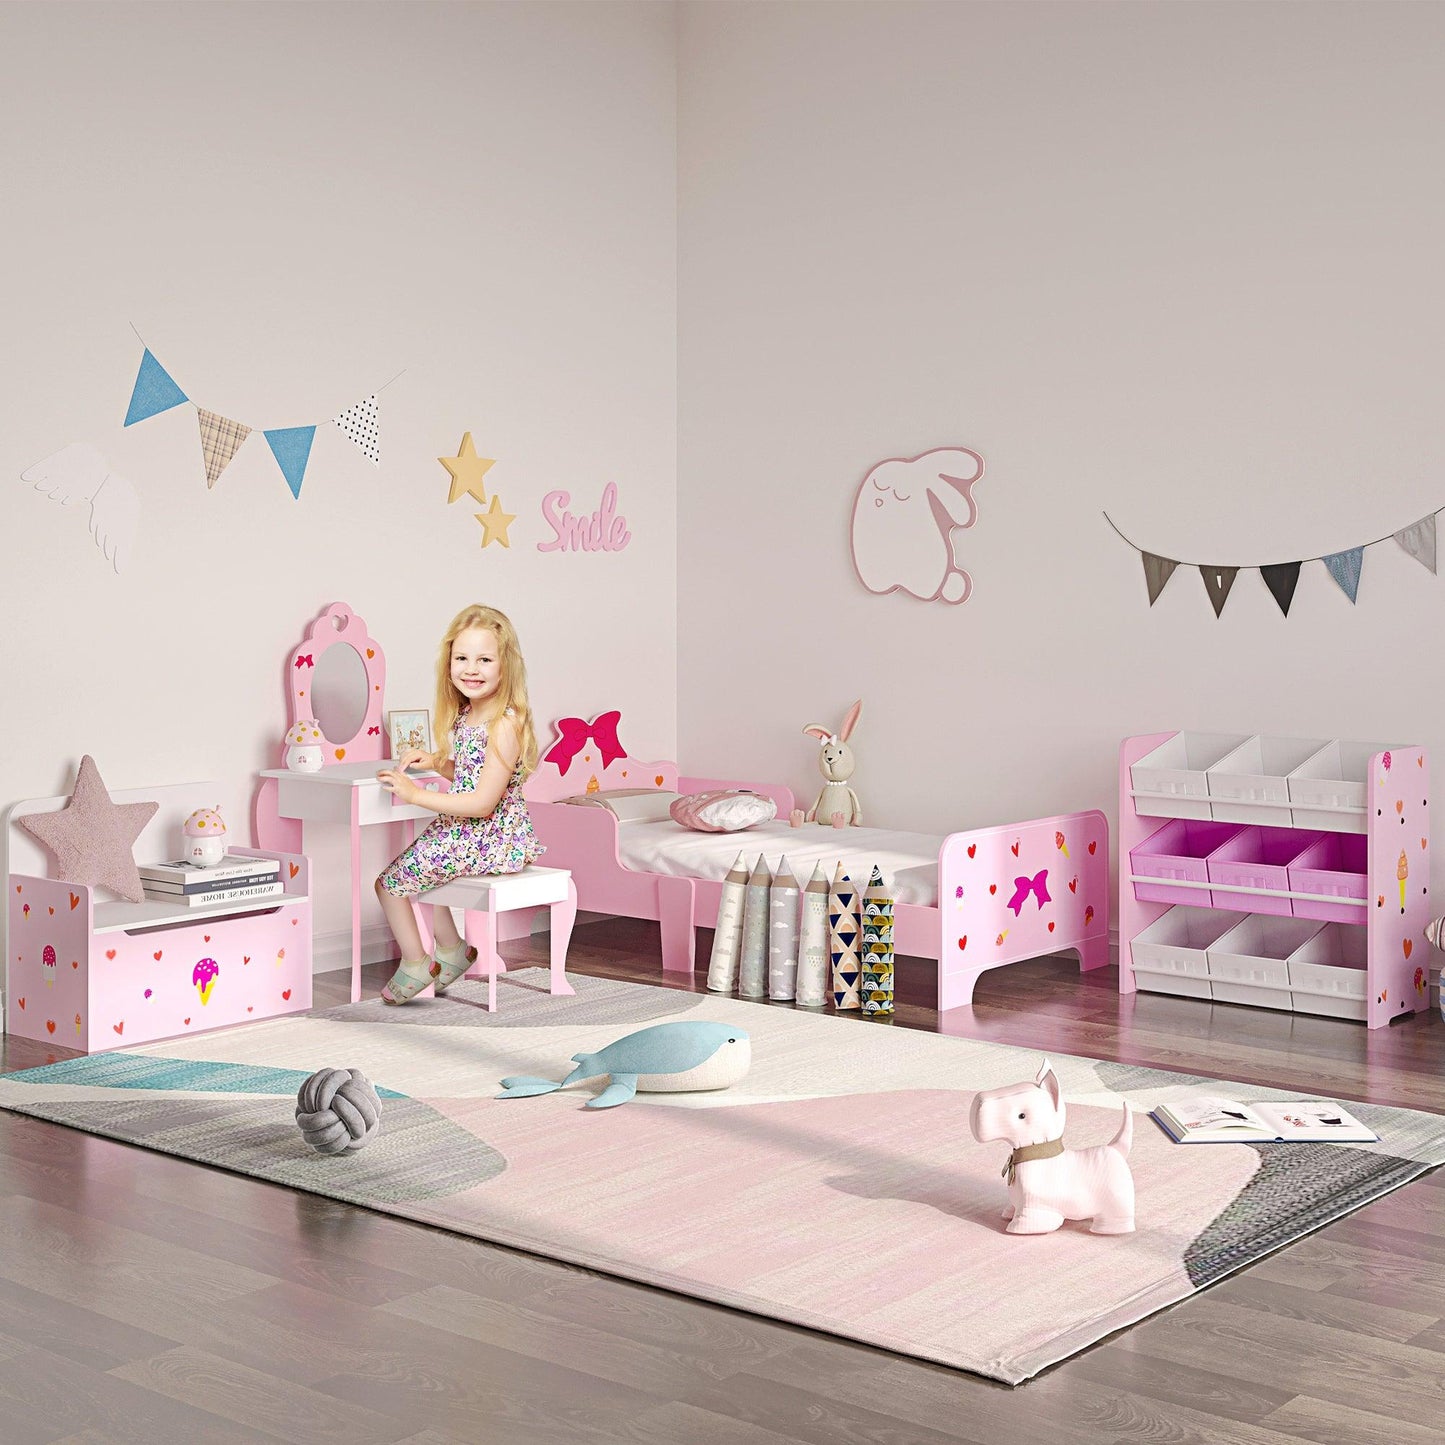 ZONEKIZ Kids Vanity Set w/ Mirror, Drawer, Cute Patterns, for Girls - Pink